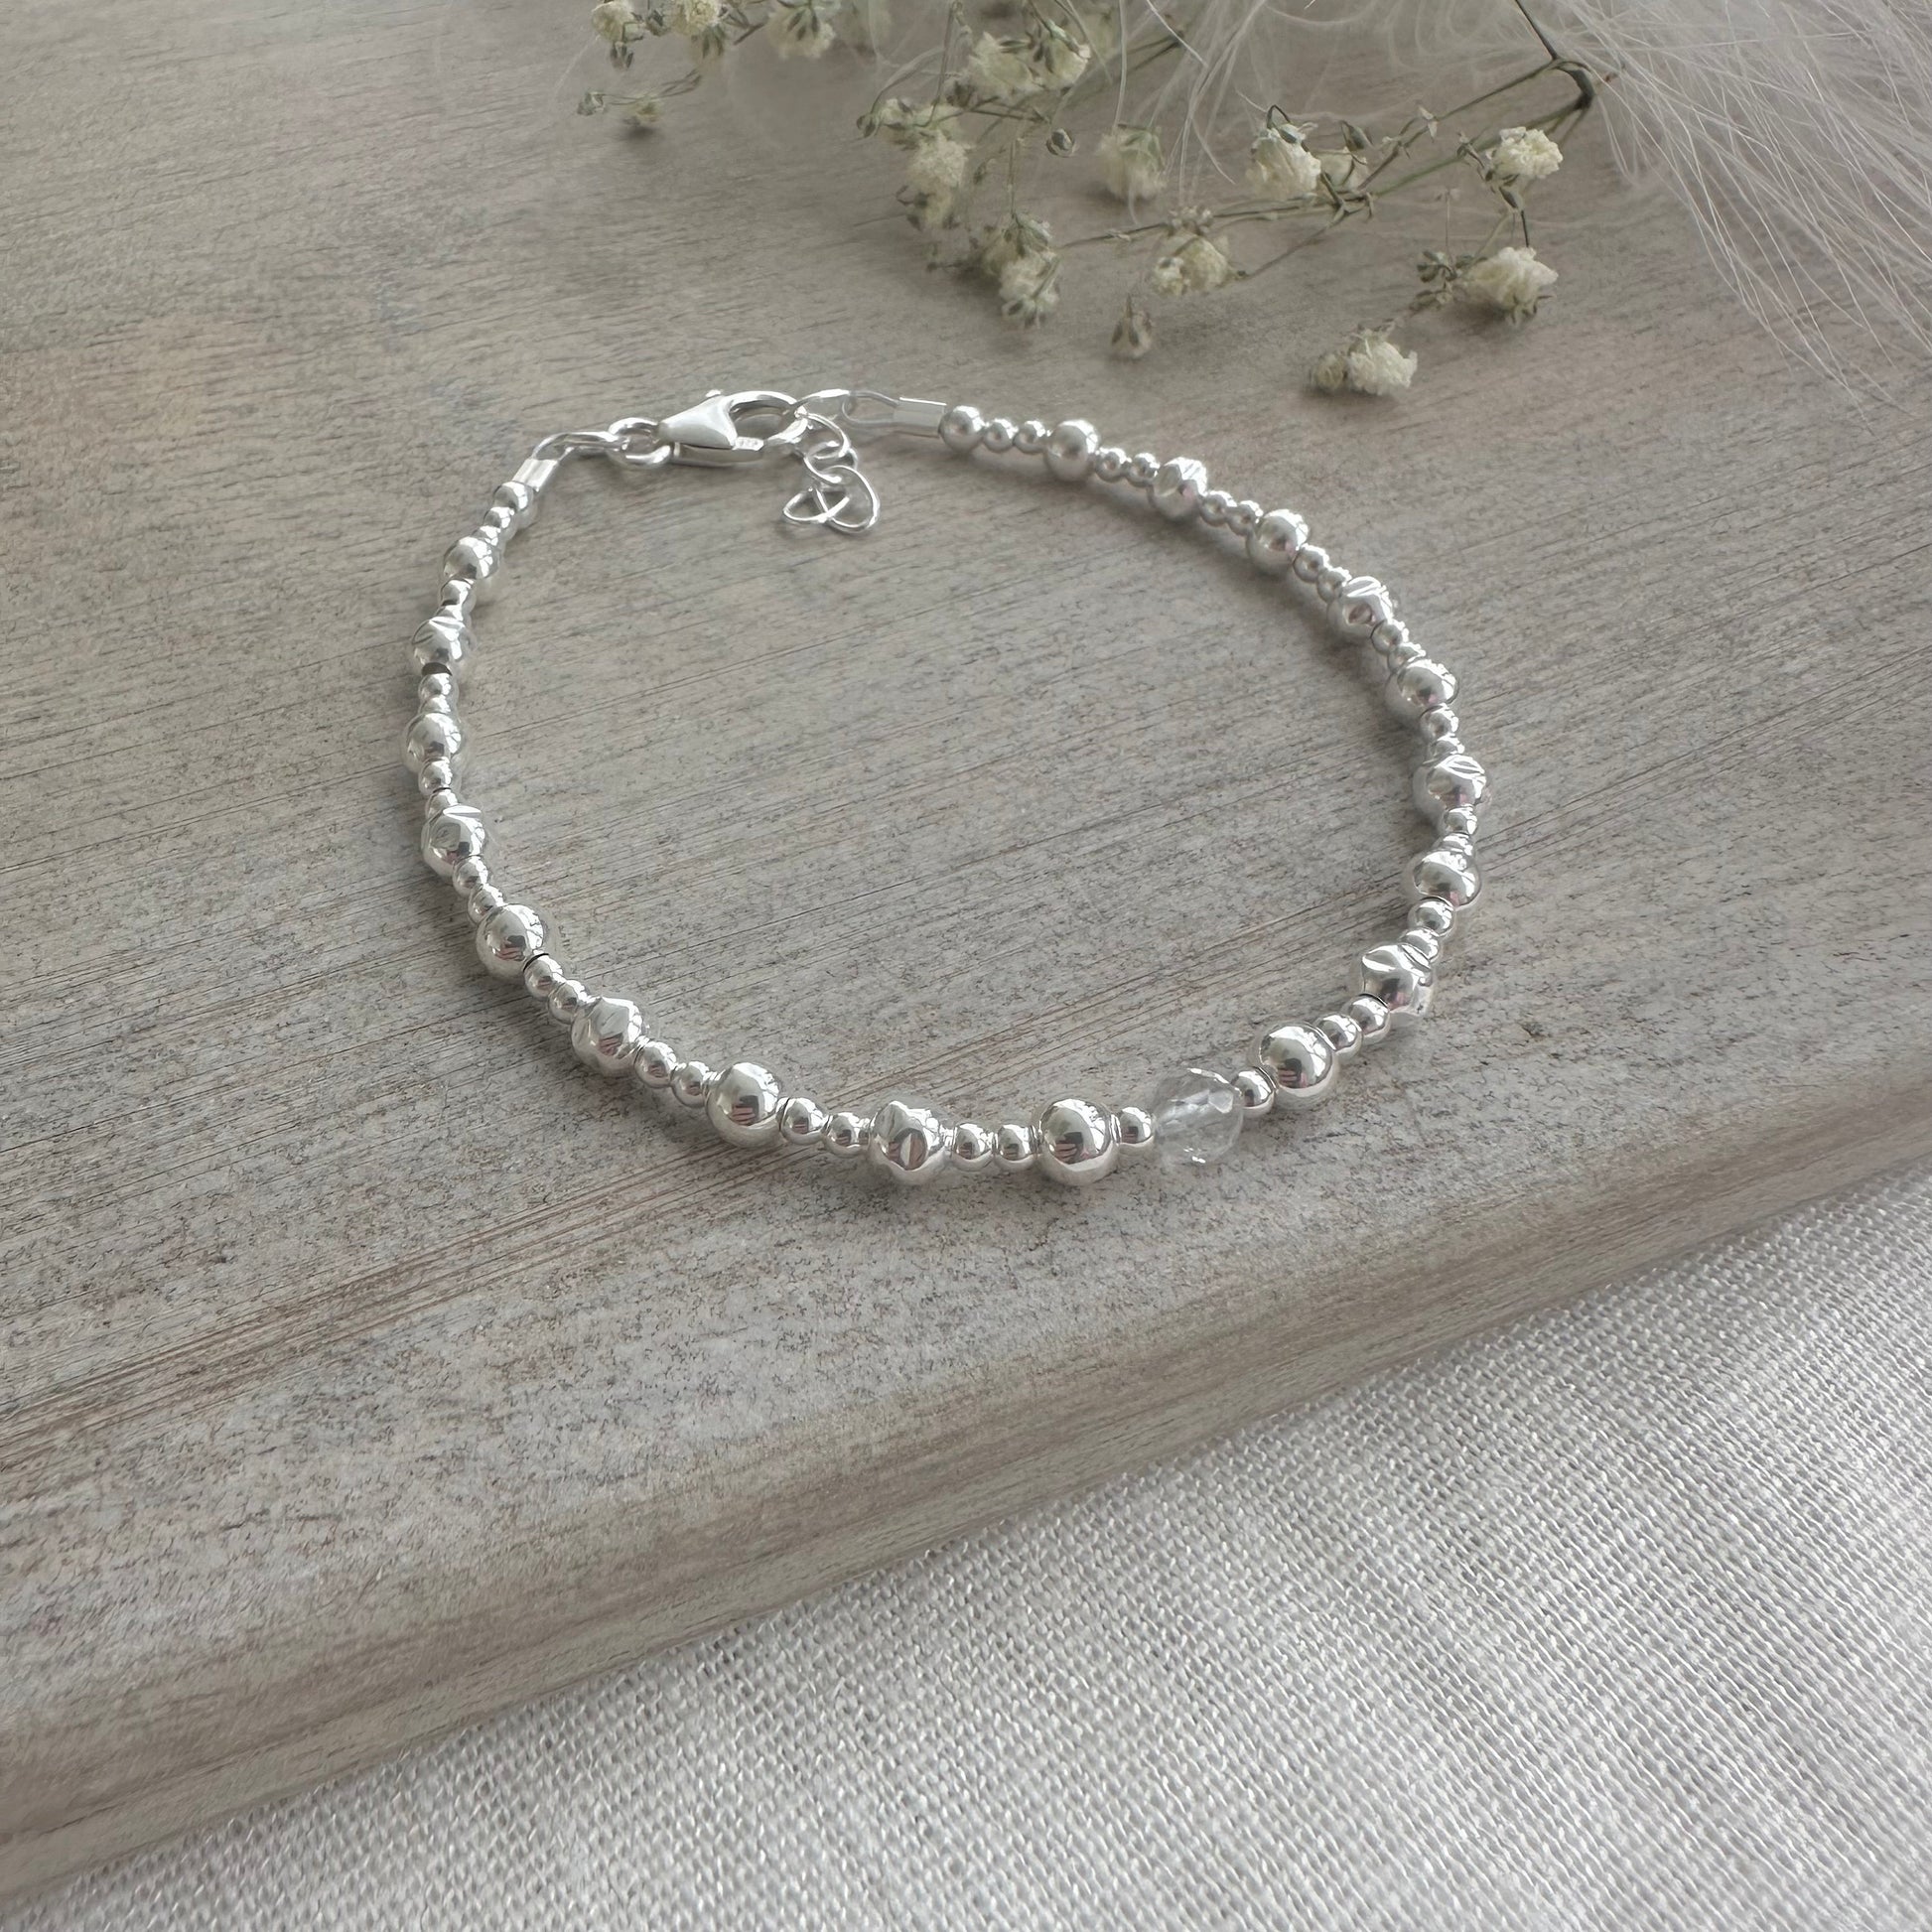 April Birthstone Clear quartz Textured Layering Bracelet, 4mm sterling silver bead bracelet for april birthday